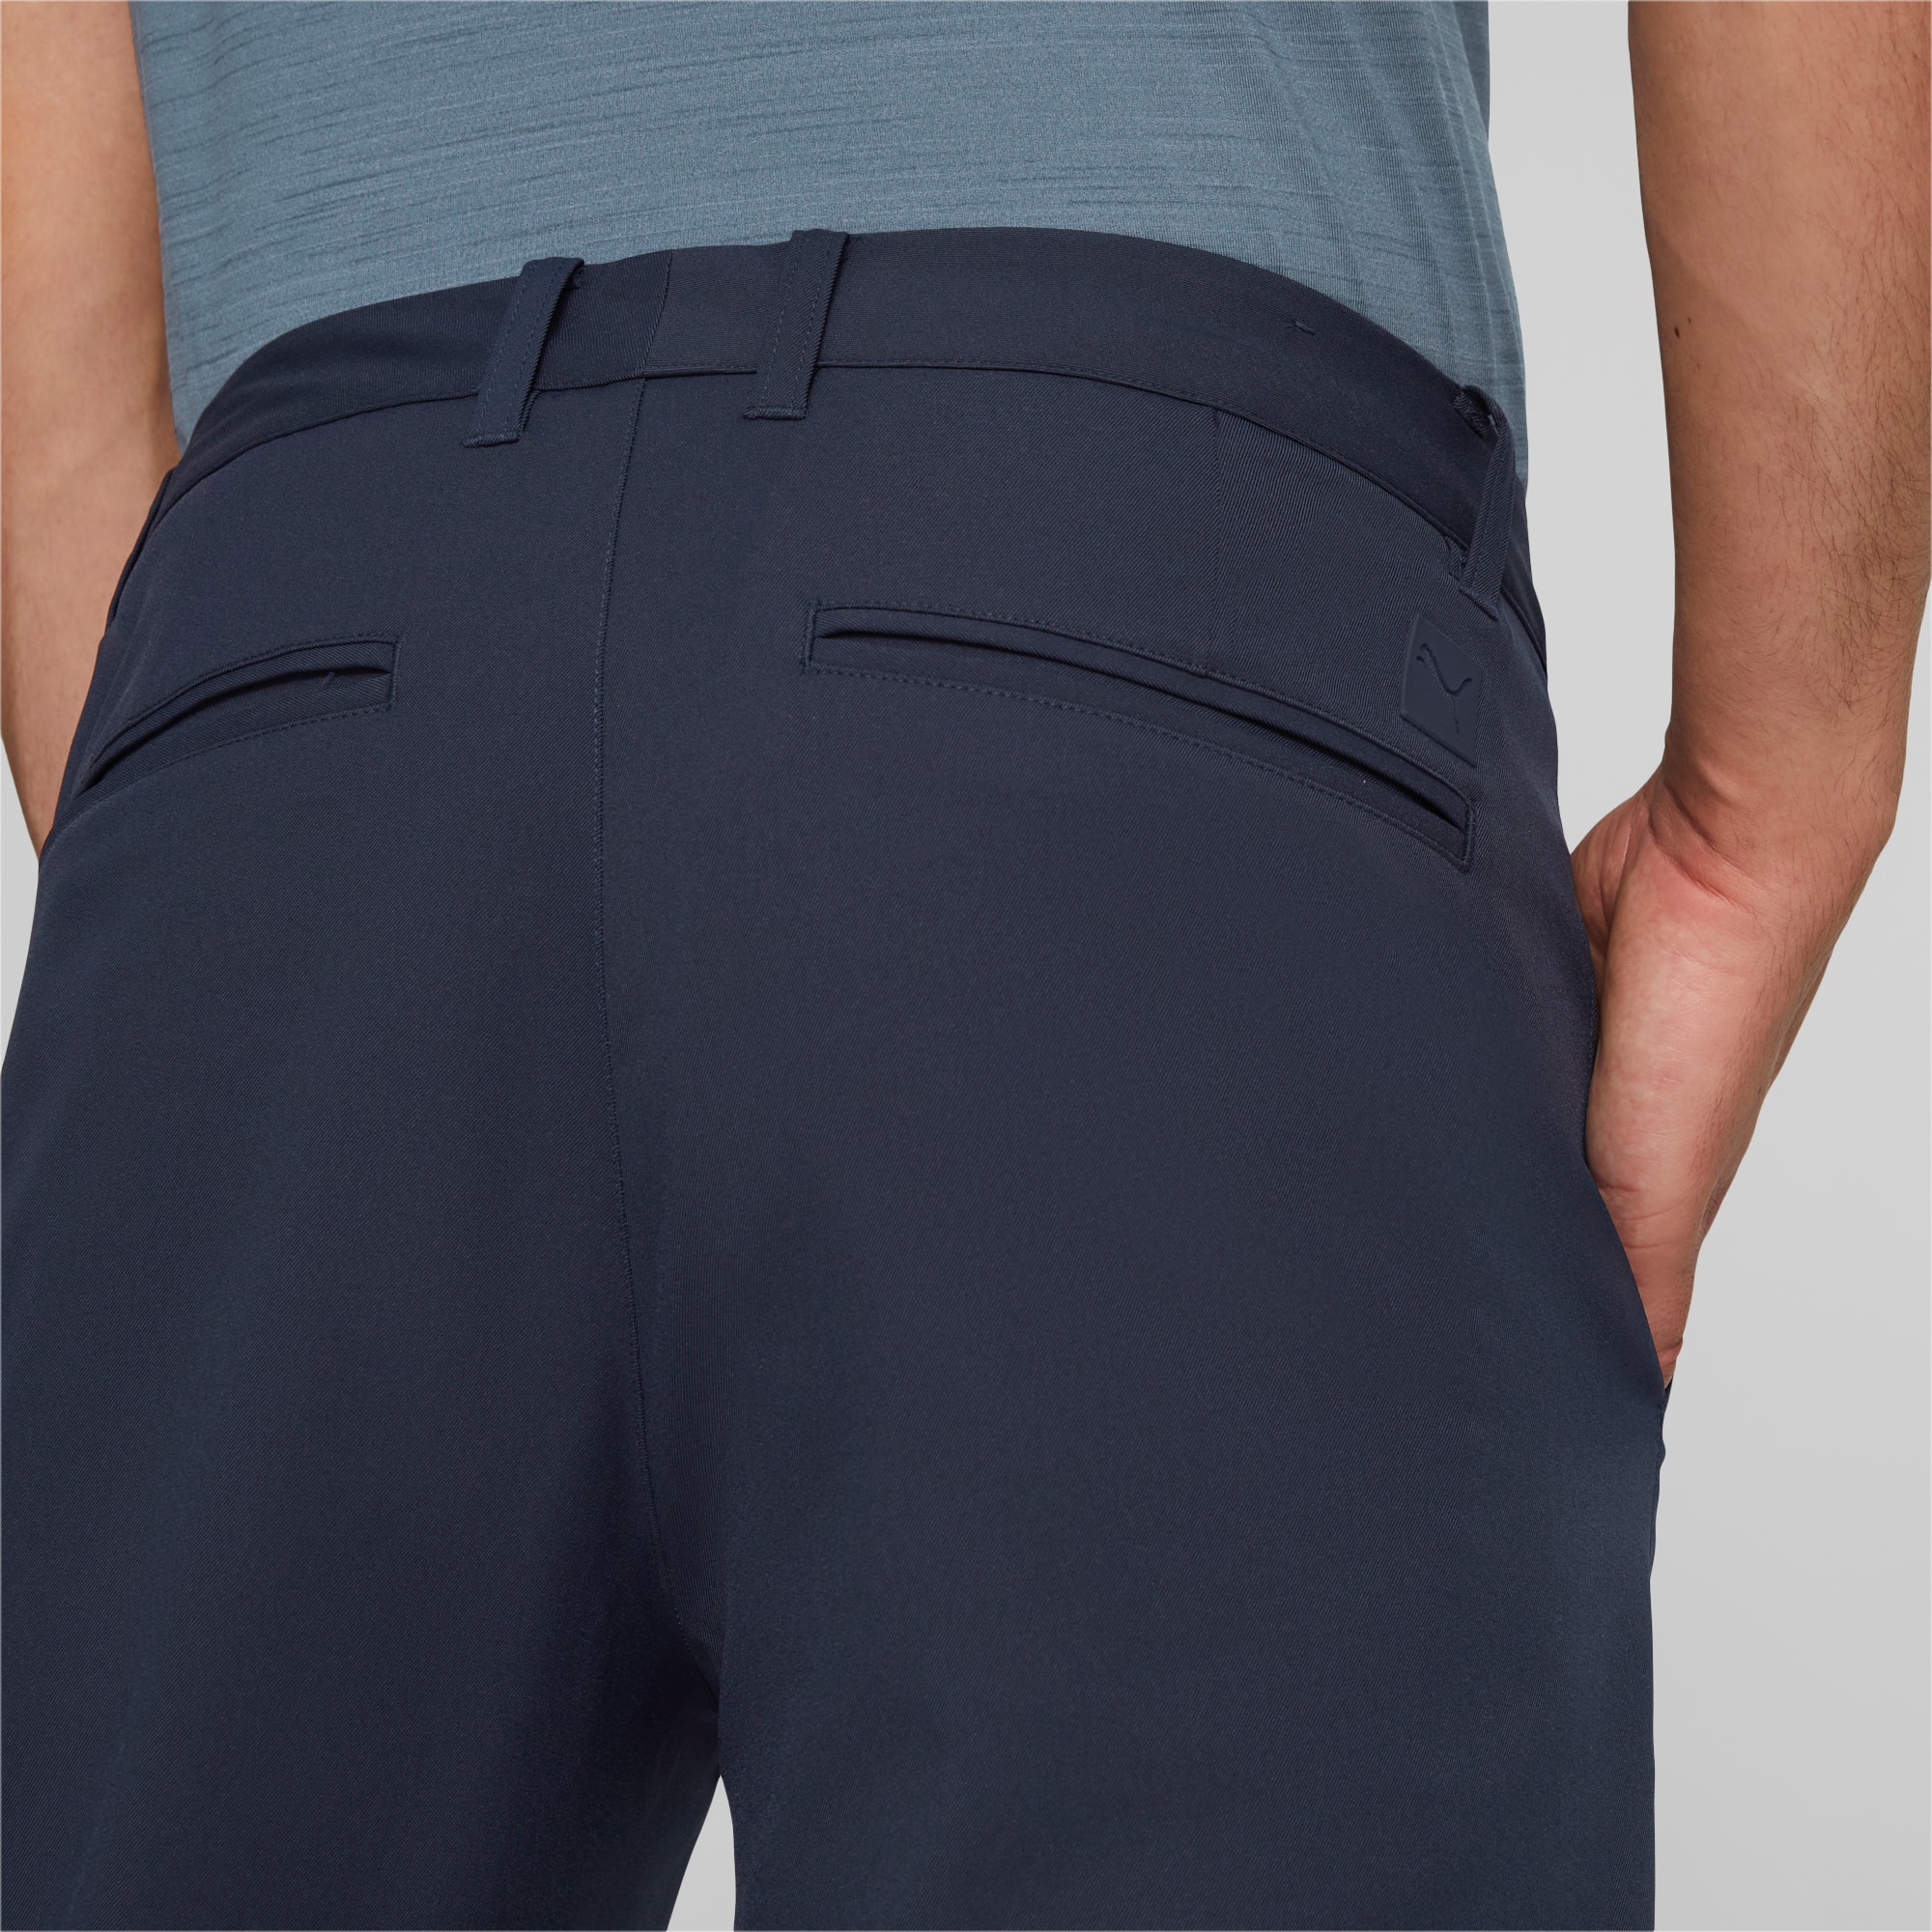 PUMA Dealer Tailored Golf Pants Men, Dark Blue, Size 30/30, Clothing